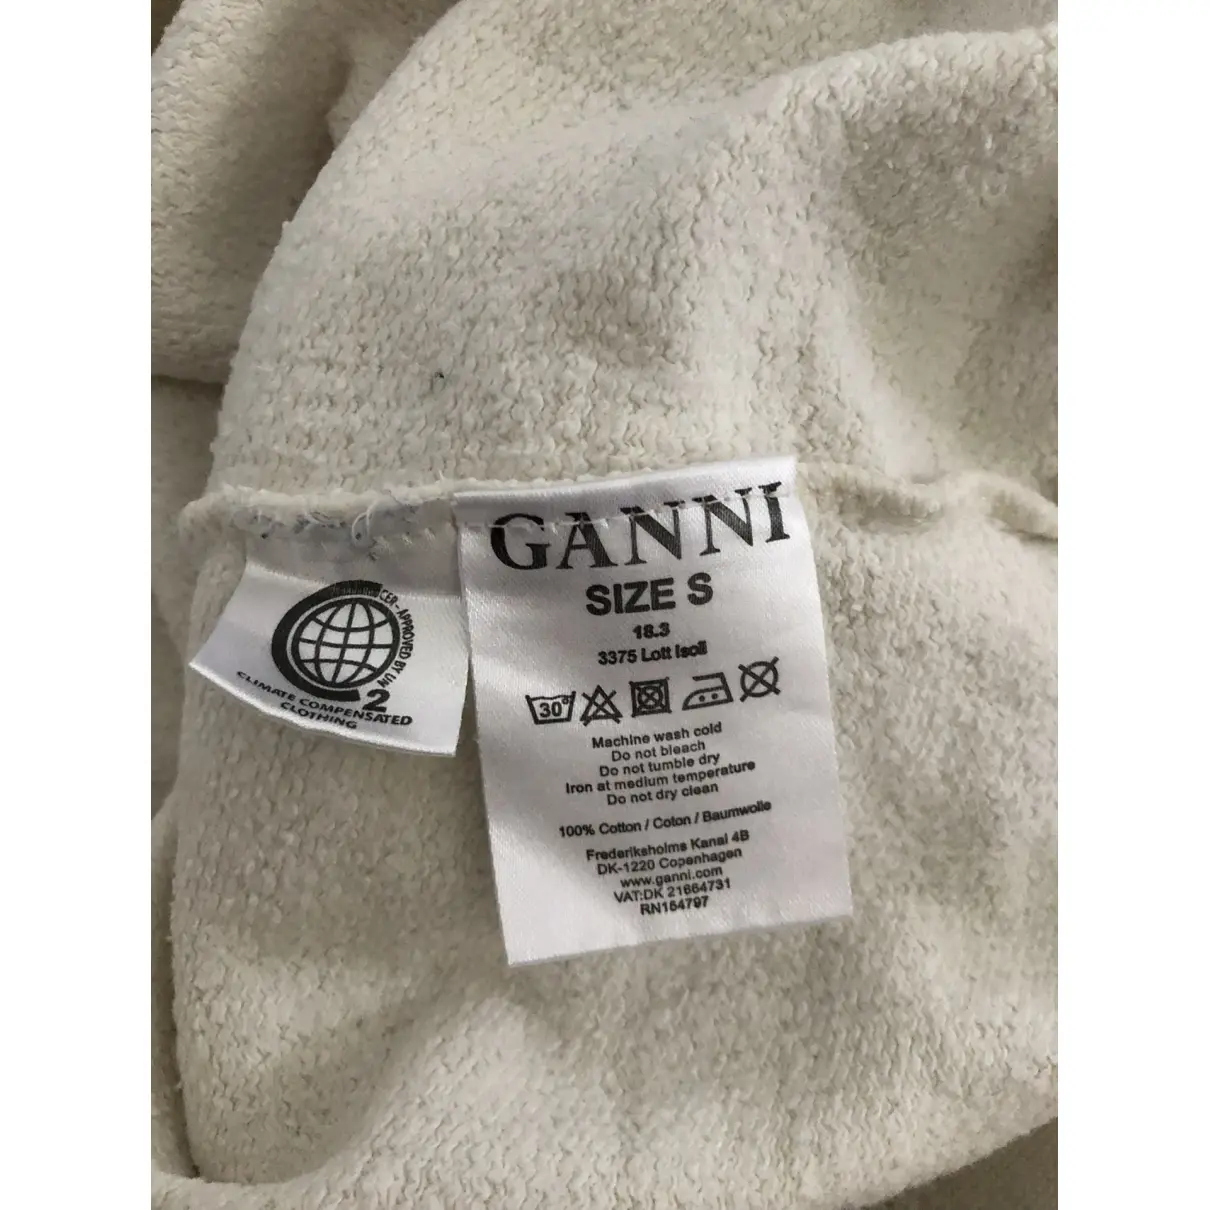 Buy Ganni Spring Summer 2020 sweatshirt online